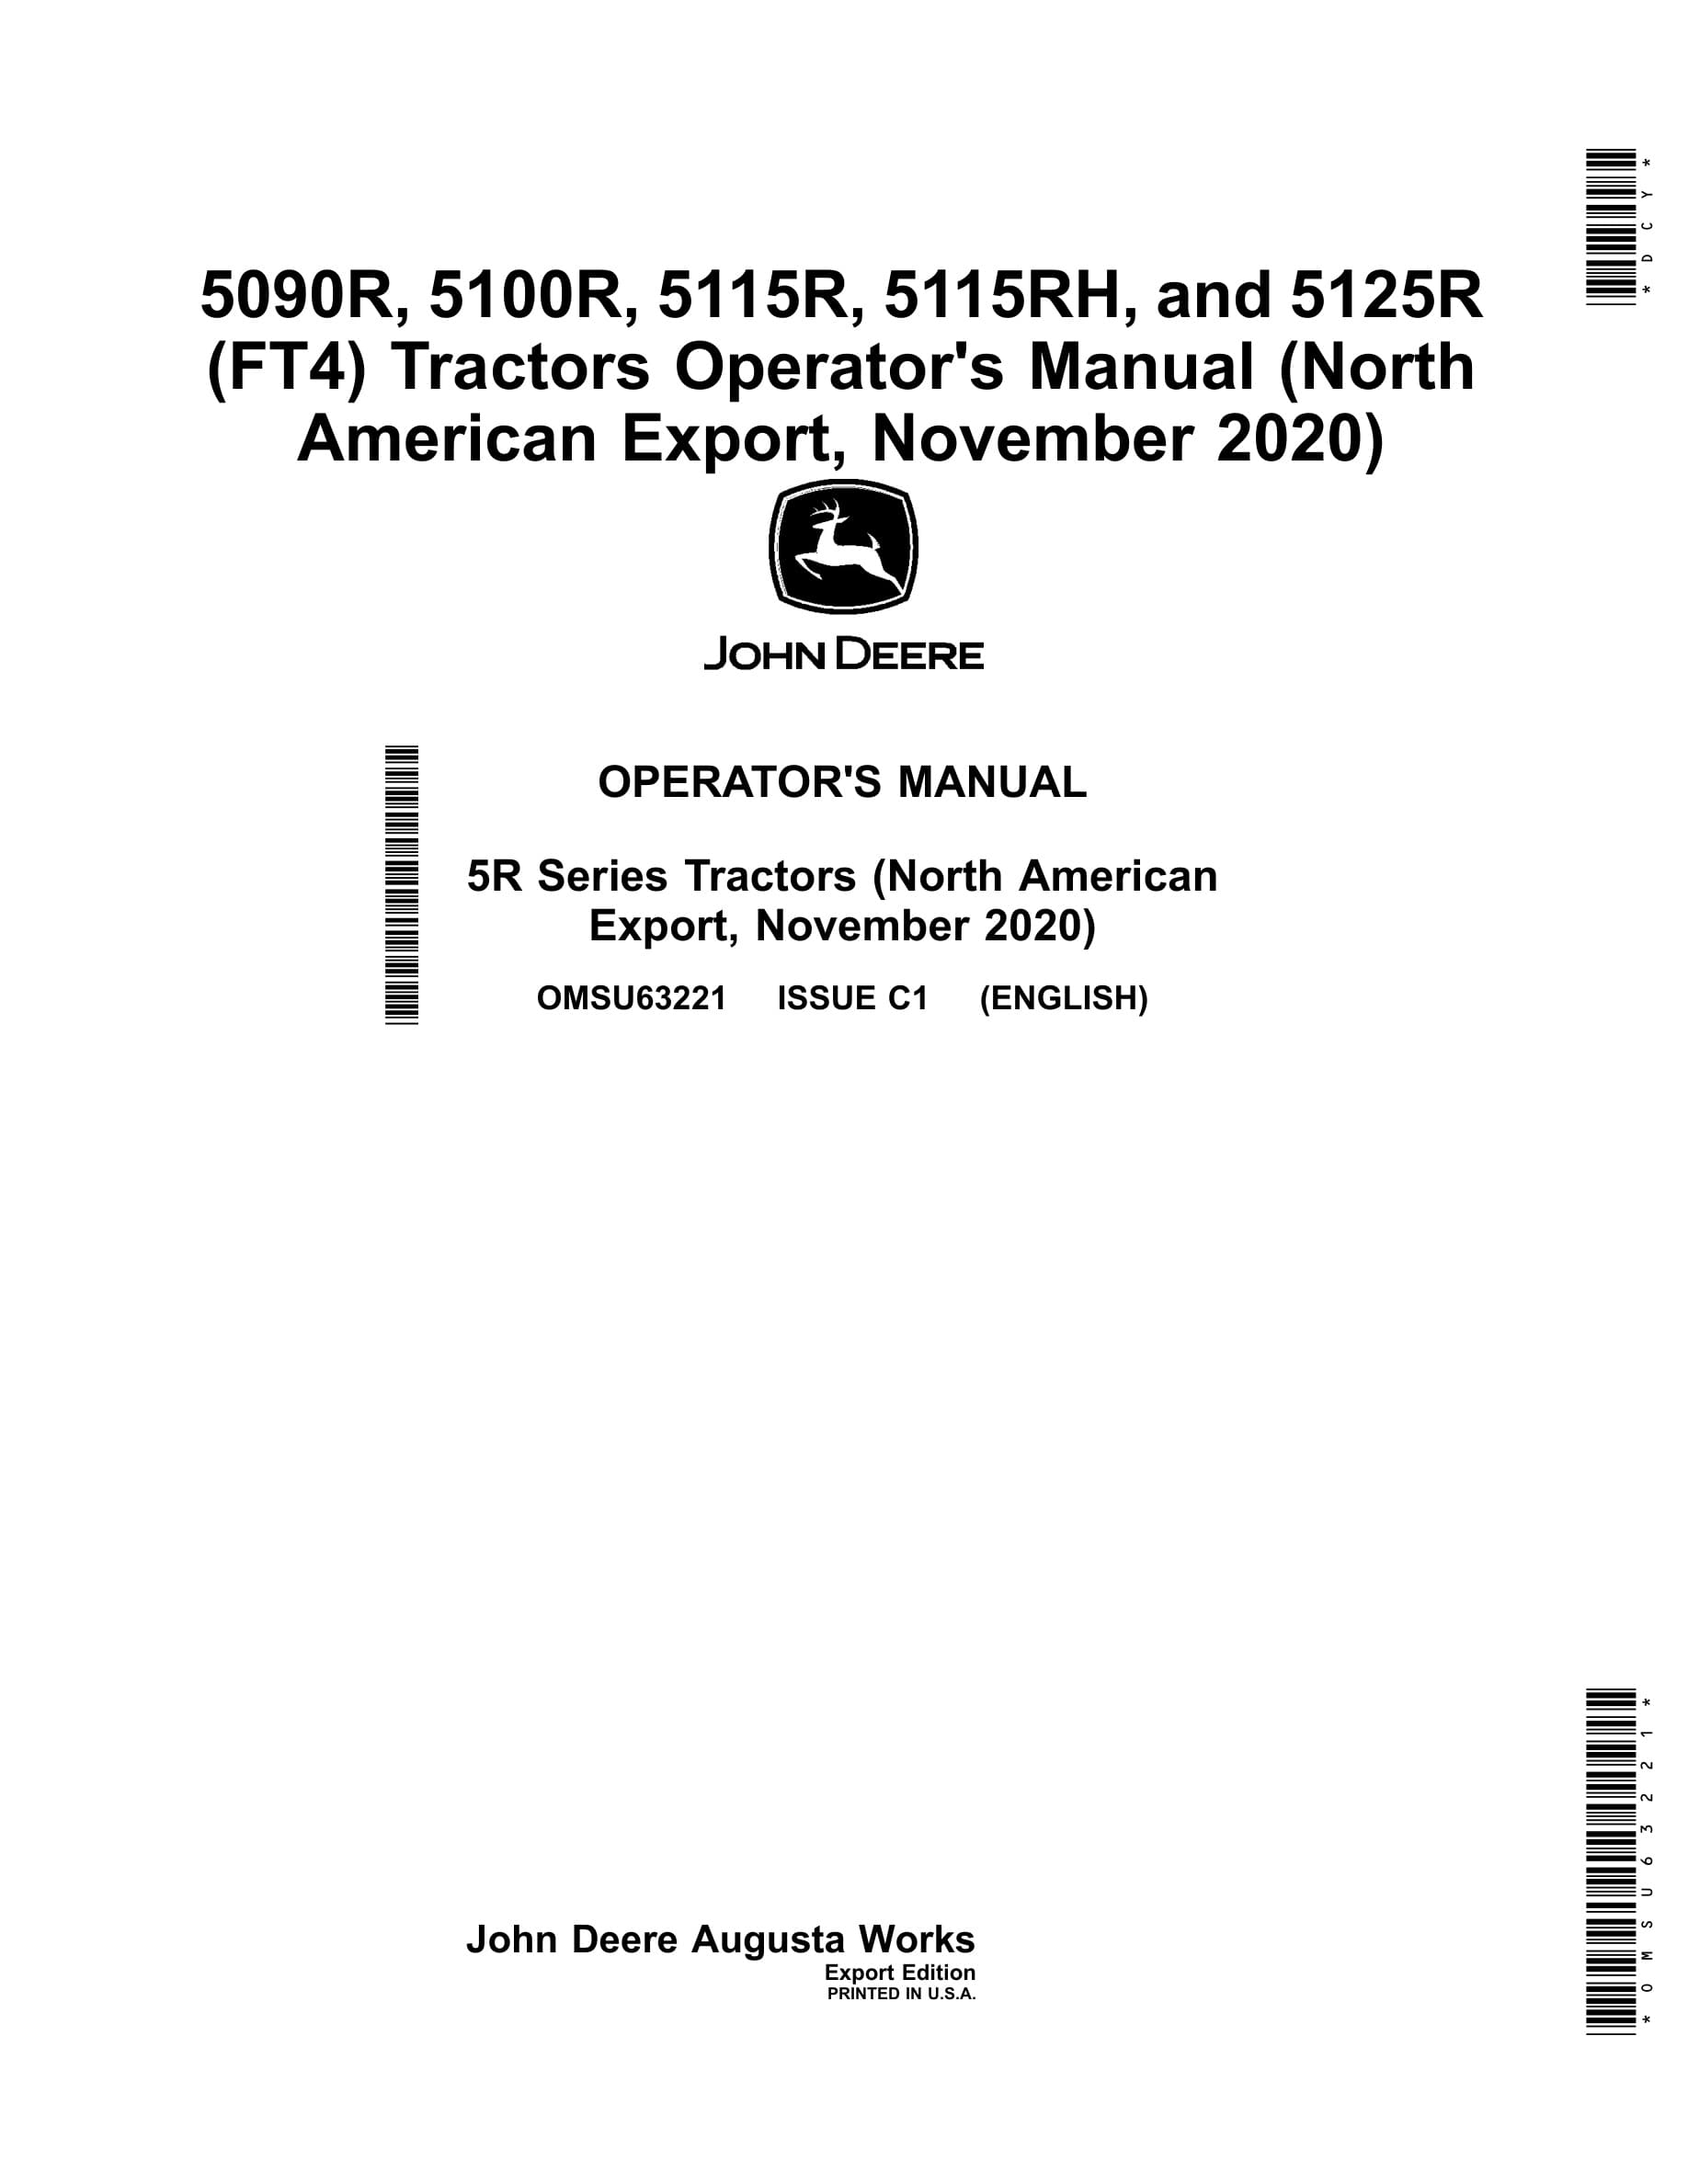 John Deere 5090r, 5100r, 5115r, 5115rh, And 5125r (ft4) Tractors Operator Manuals OMSU63221-1